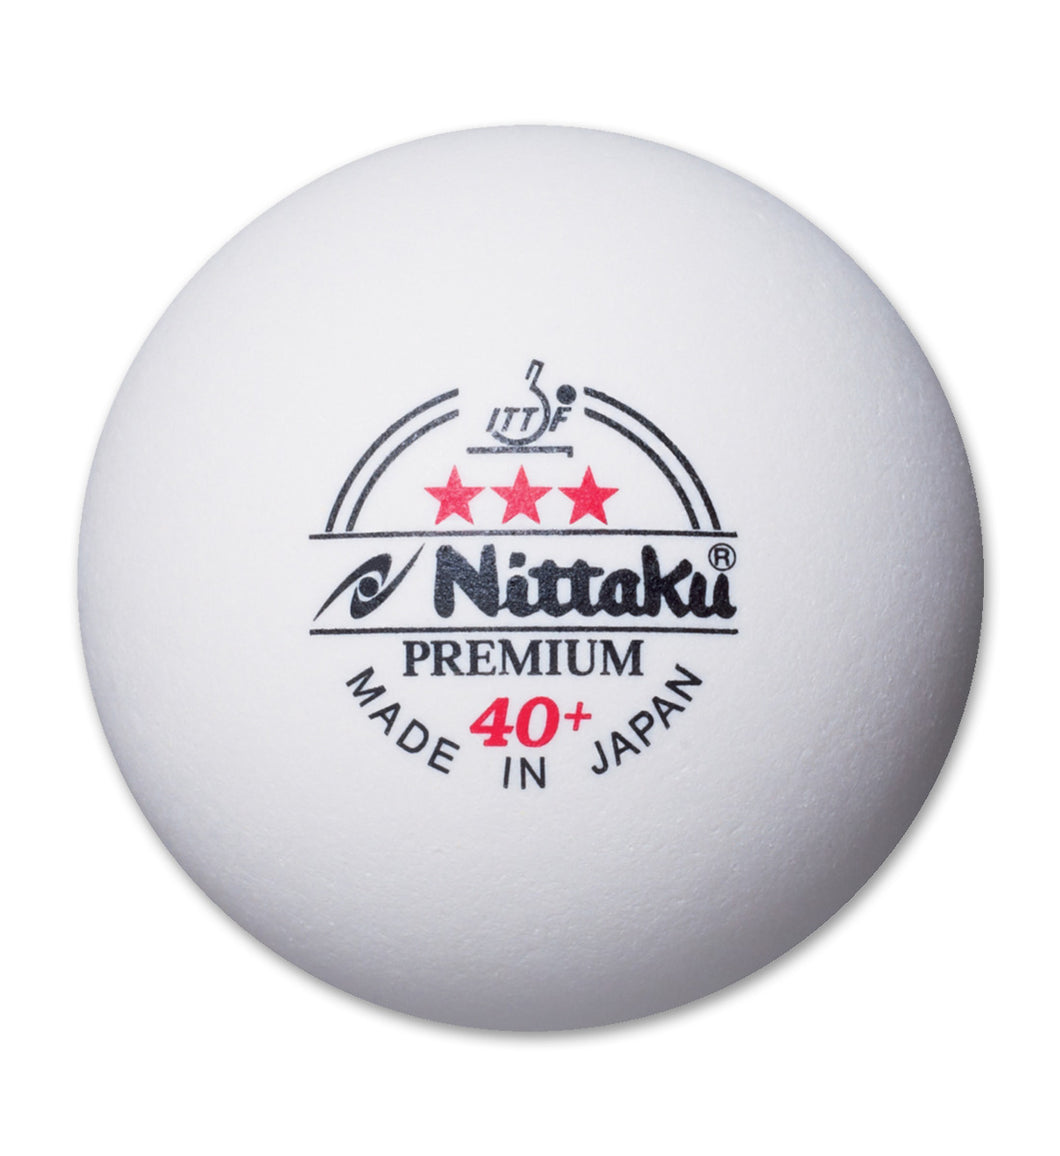 Nittaku 3-Star Premium 40+ Balls (6 Balls)